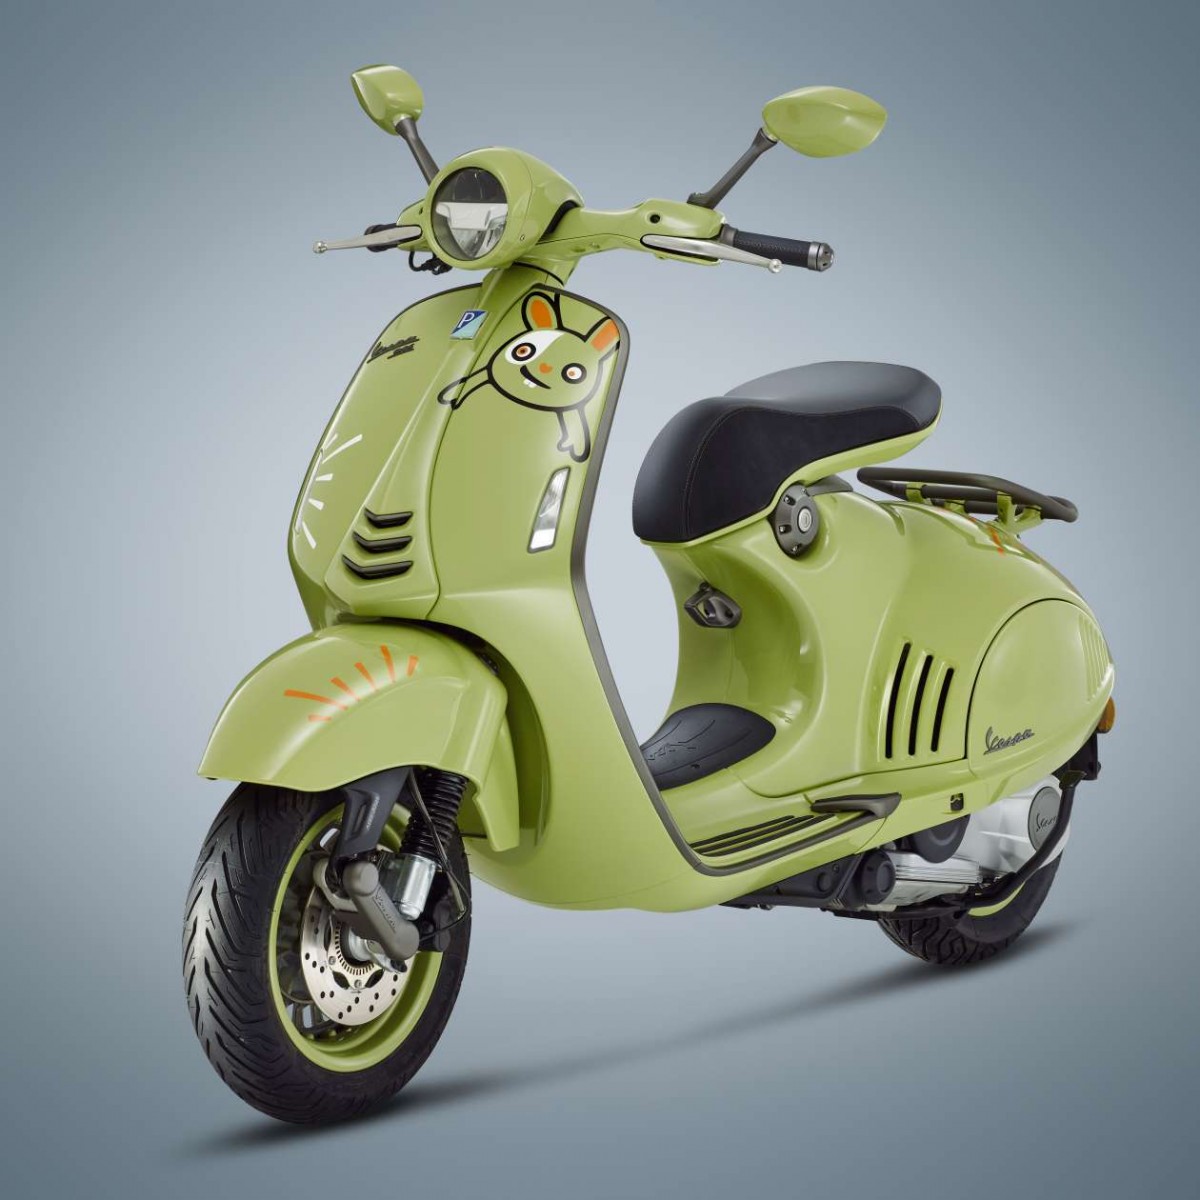 Piaggio reveals Vespa 946 10° scooter | Shifting-Gears